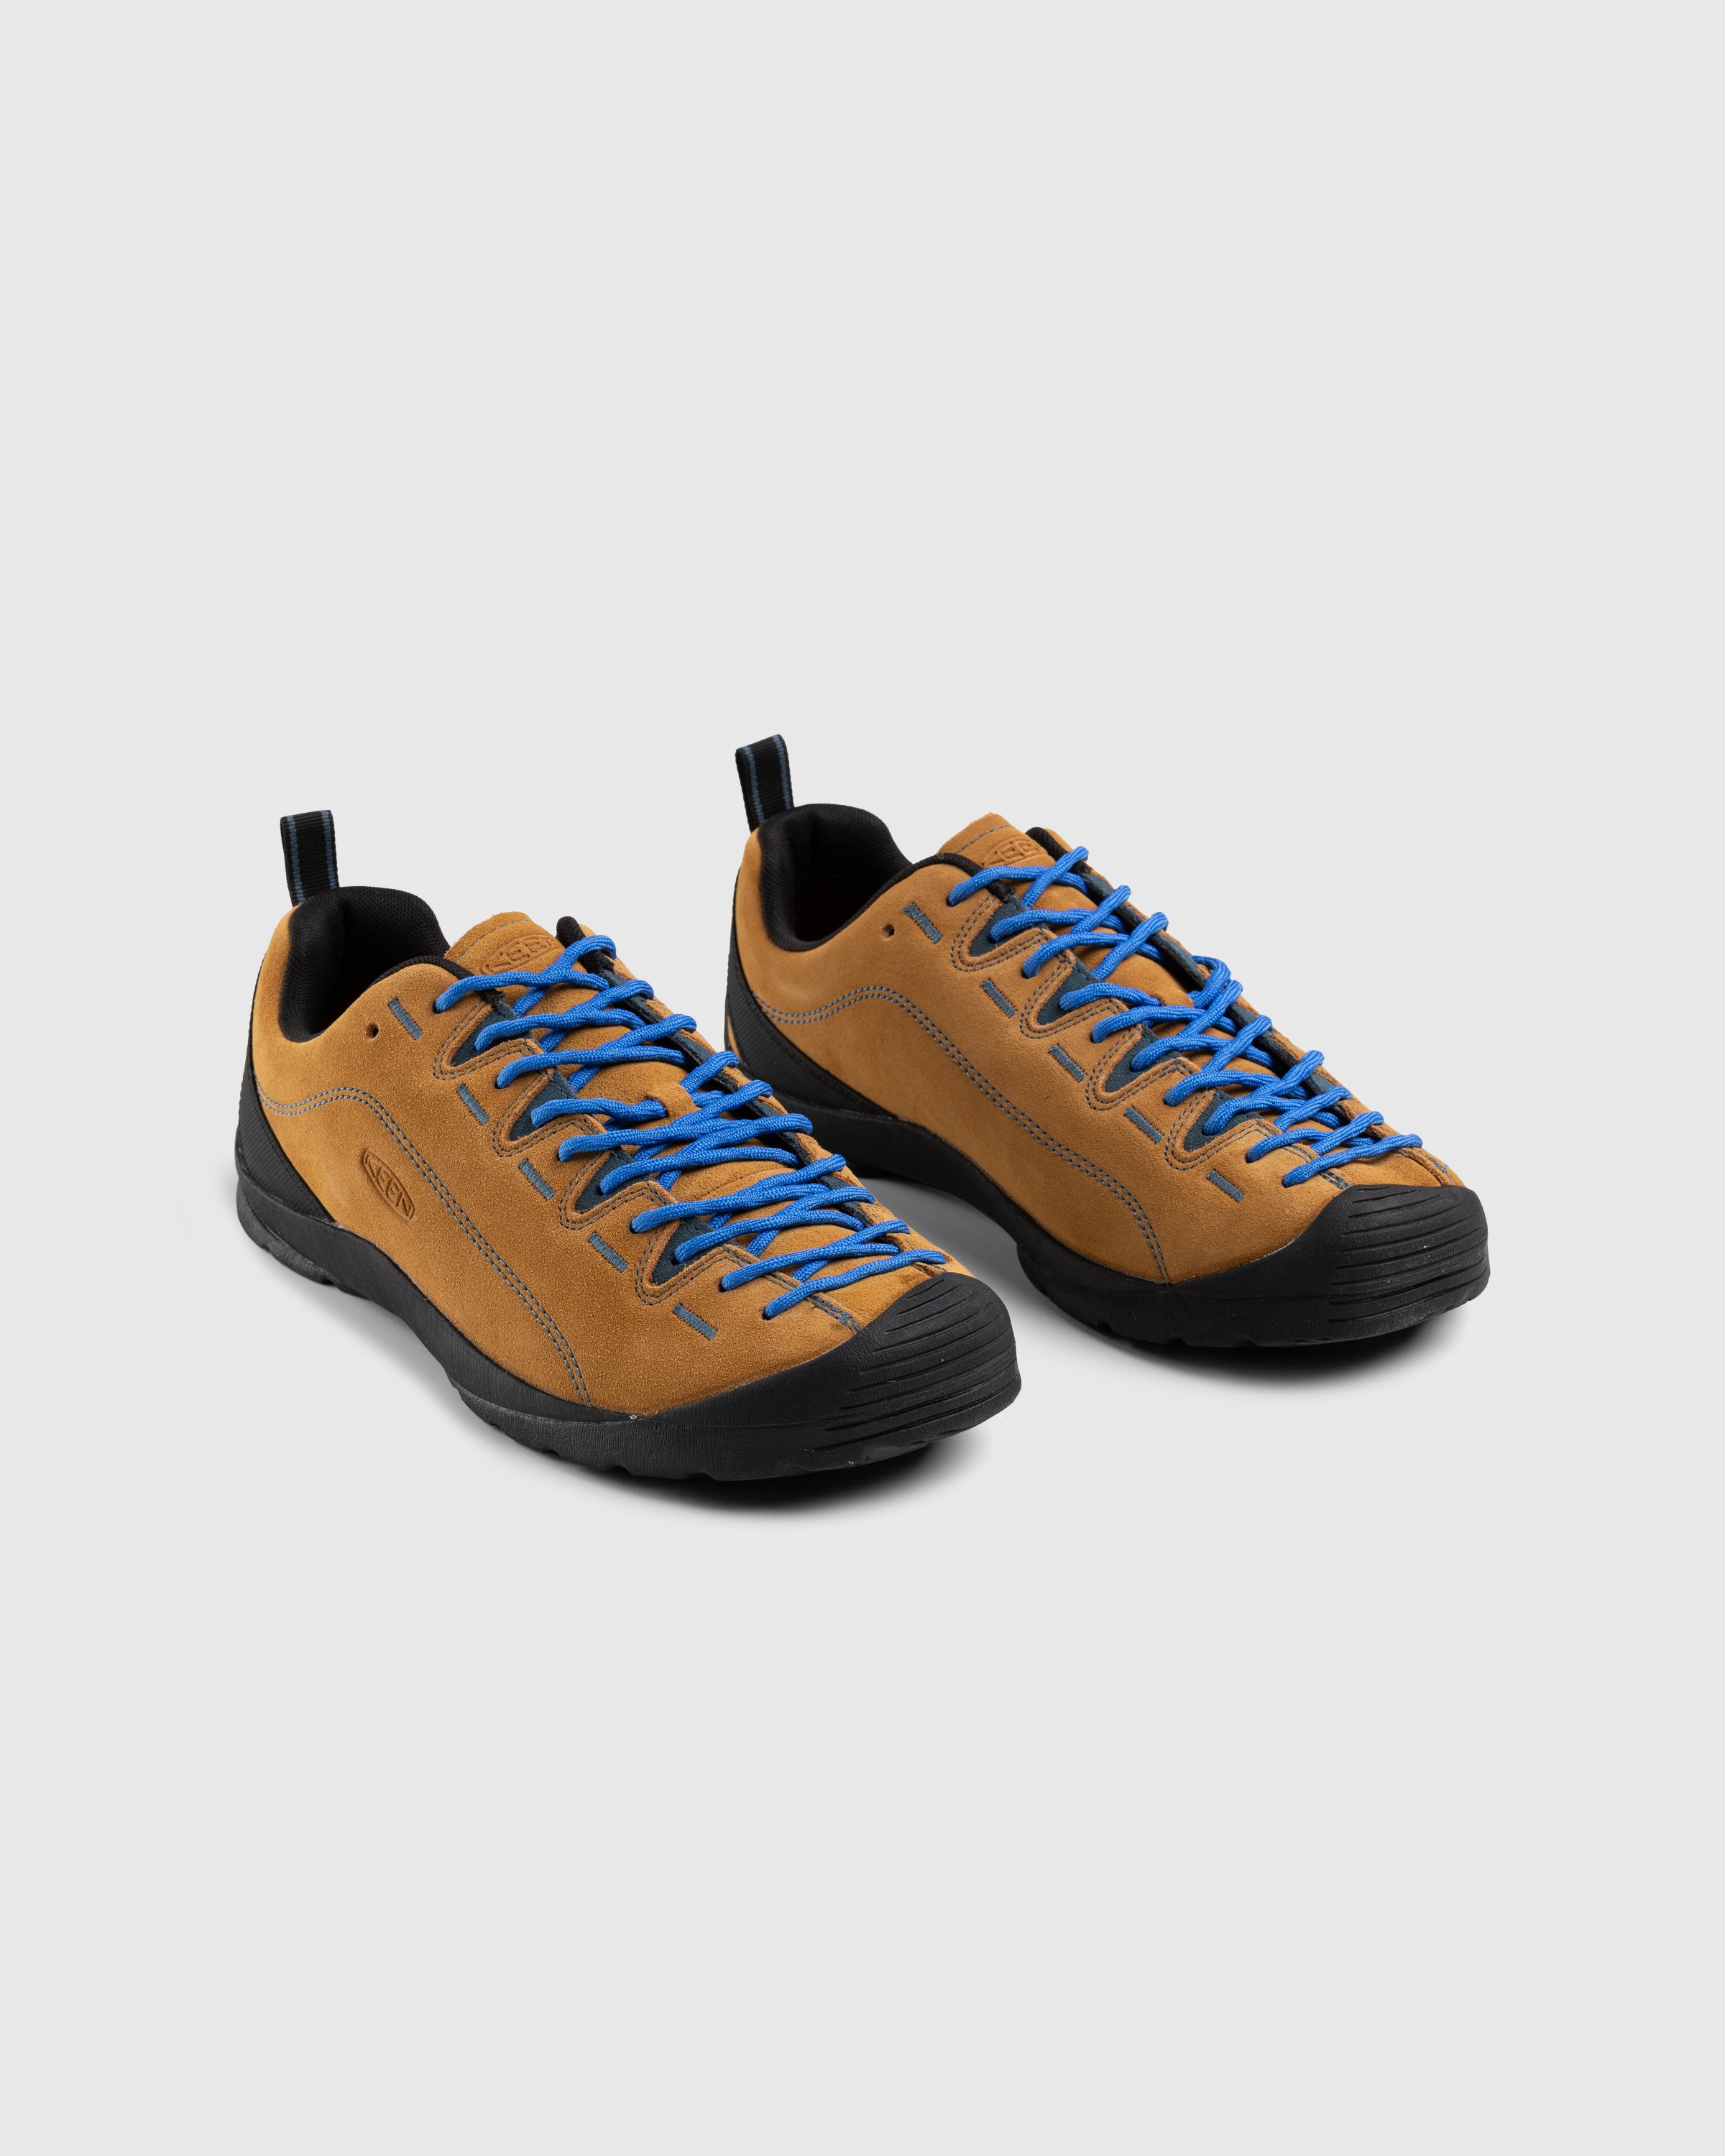 Keen - JASPER CATHAY SPICE/ORION BLUE - Footwear - Multi - Image 3